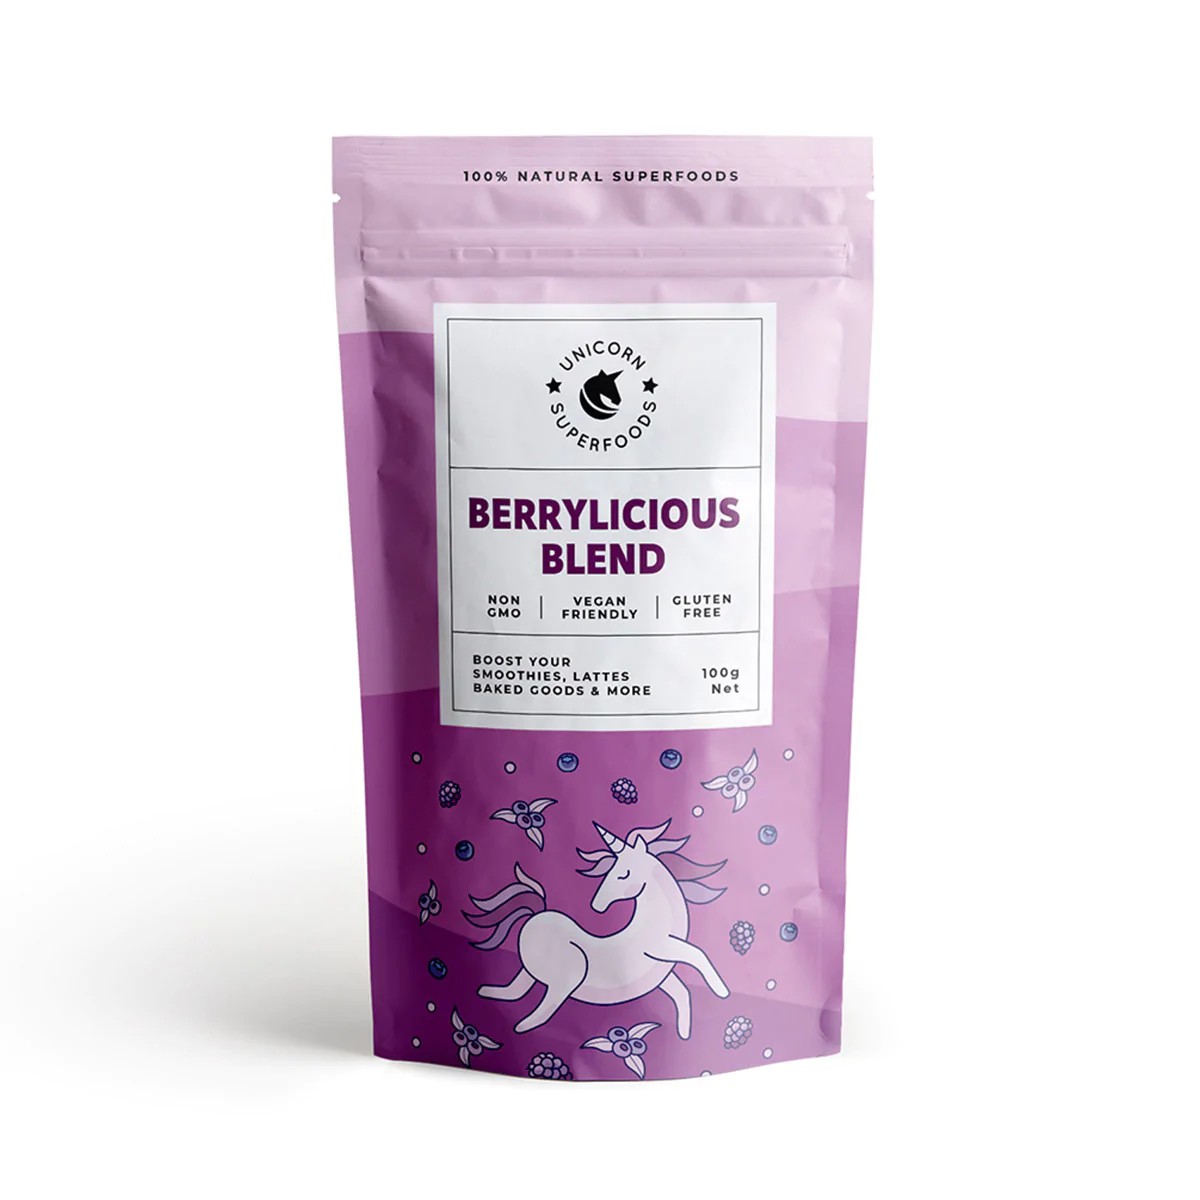 berrylicious blend unicorn superfood 01